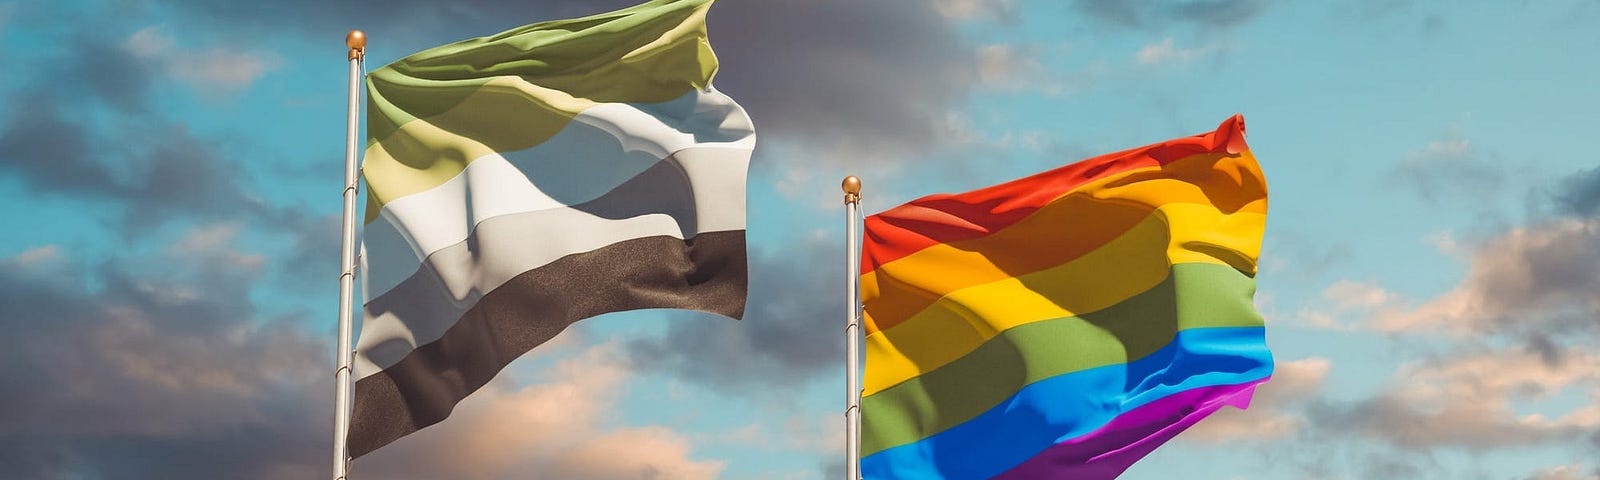 The aromantic flag next to the LGBTQ rainbow flag.